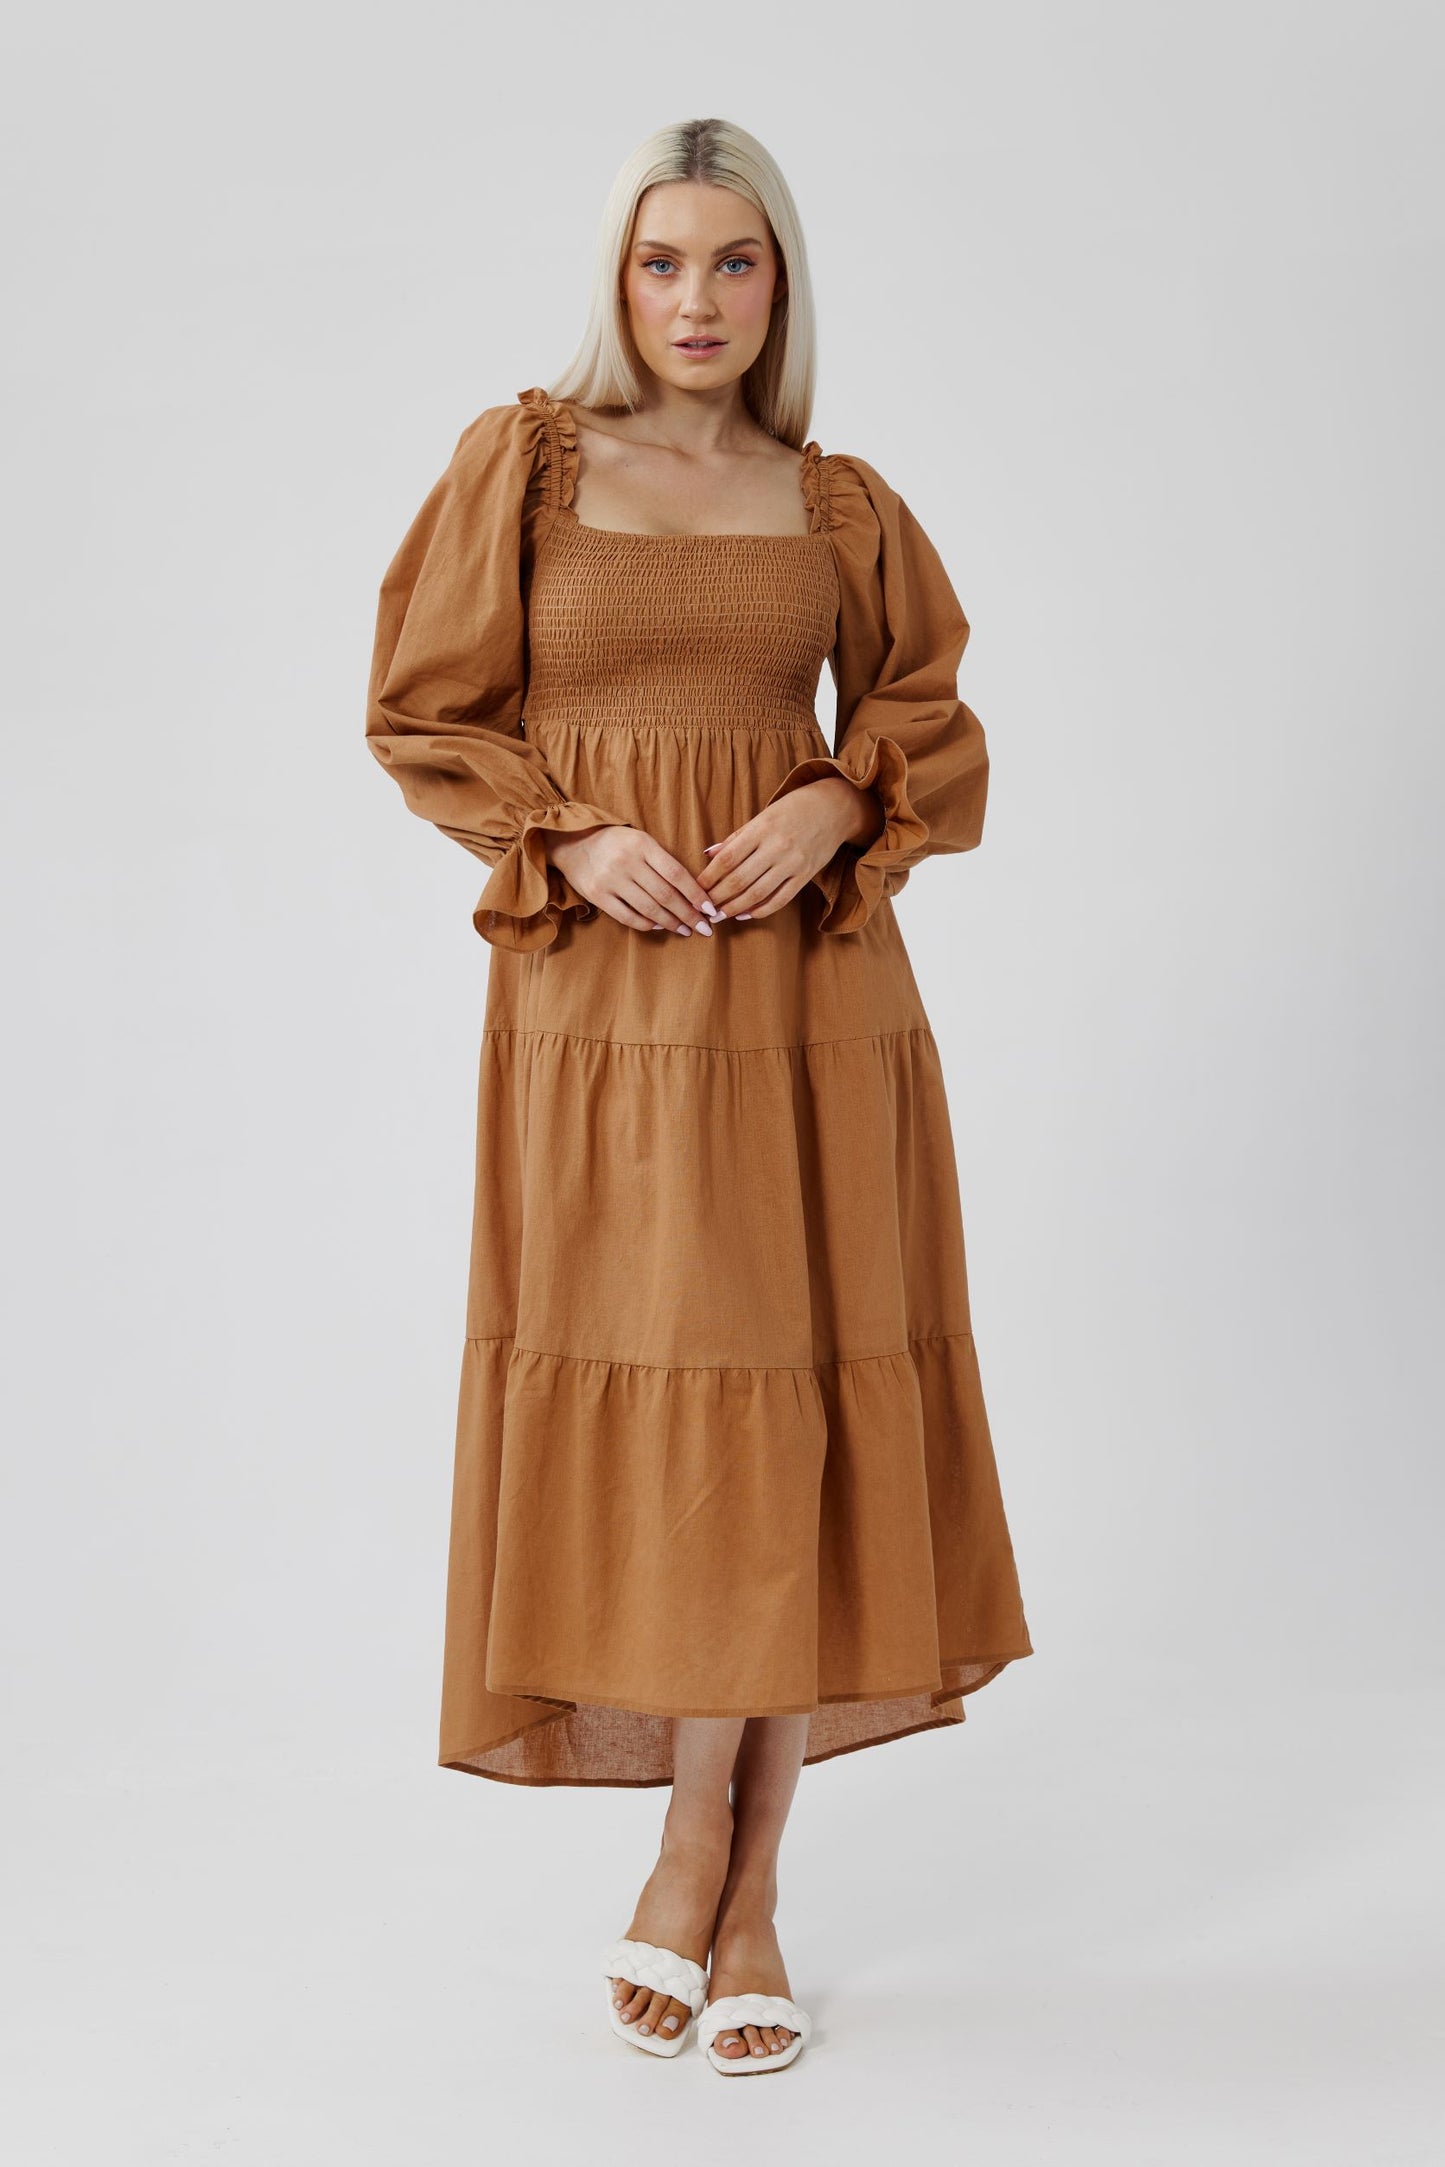 Daisy Says- Delta Long Sleeve Dress- Meerkat Cotton Linen